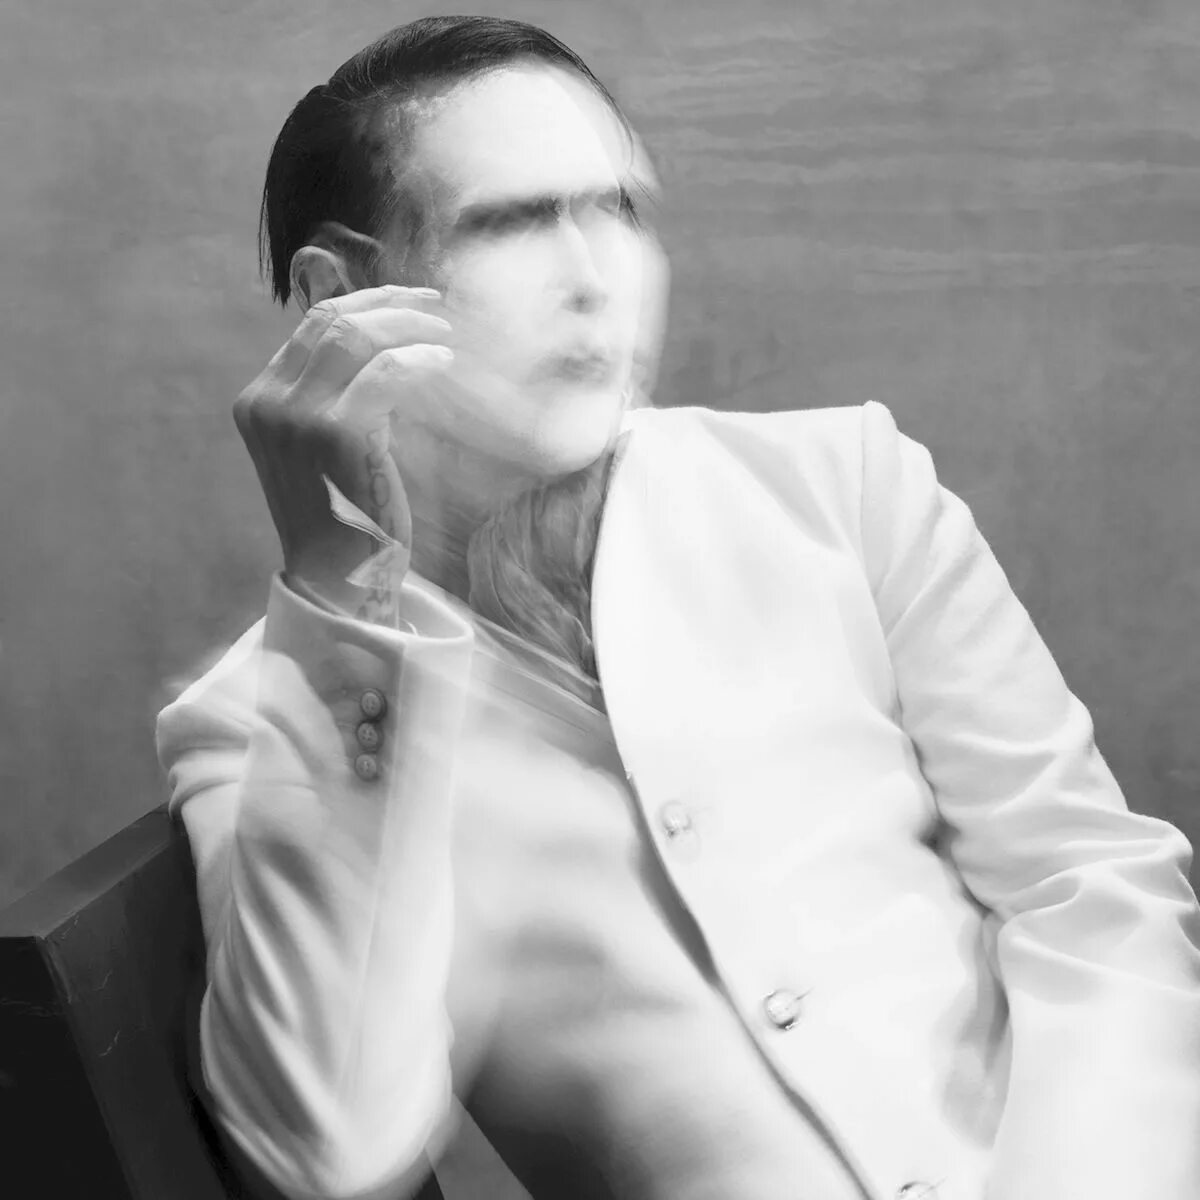 Мэрилин мэнсон pale Emperor. Мэрилин мэнсон 2015. 2015 - The pale Emperor. The pale Emperor Marilyn Manson обложка. Killing strangers